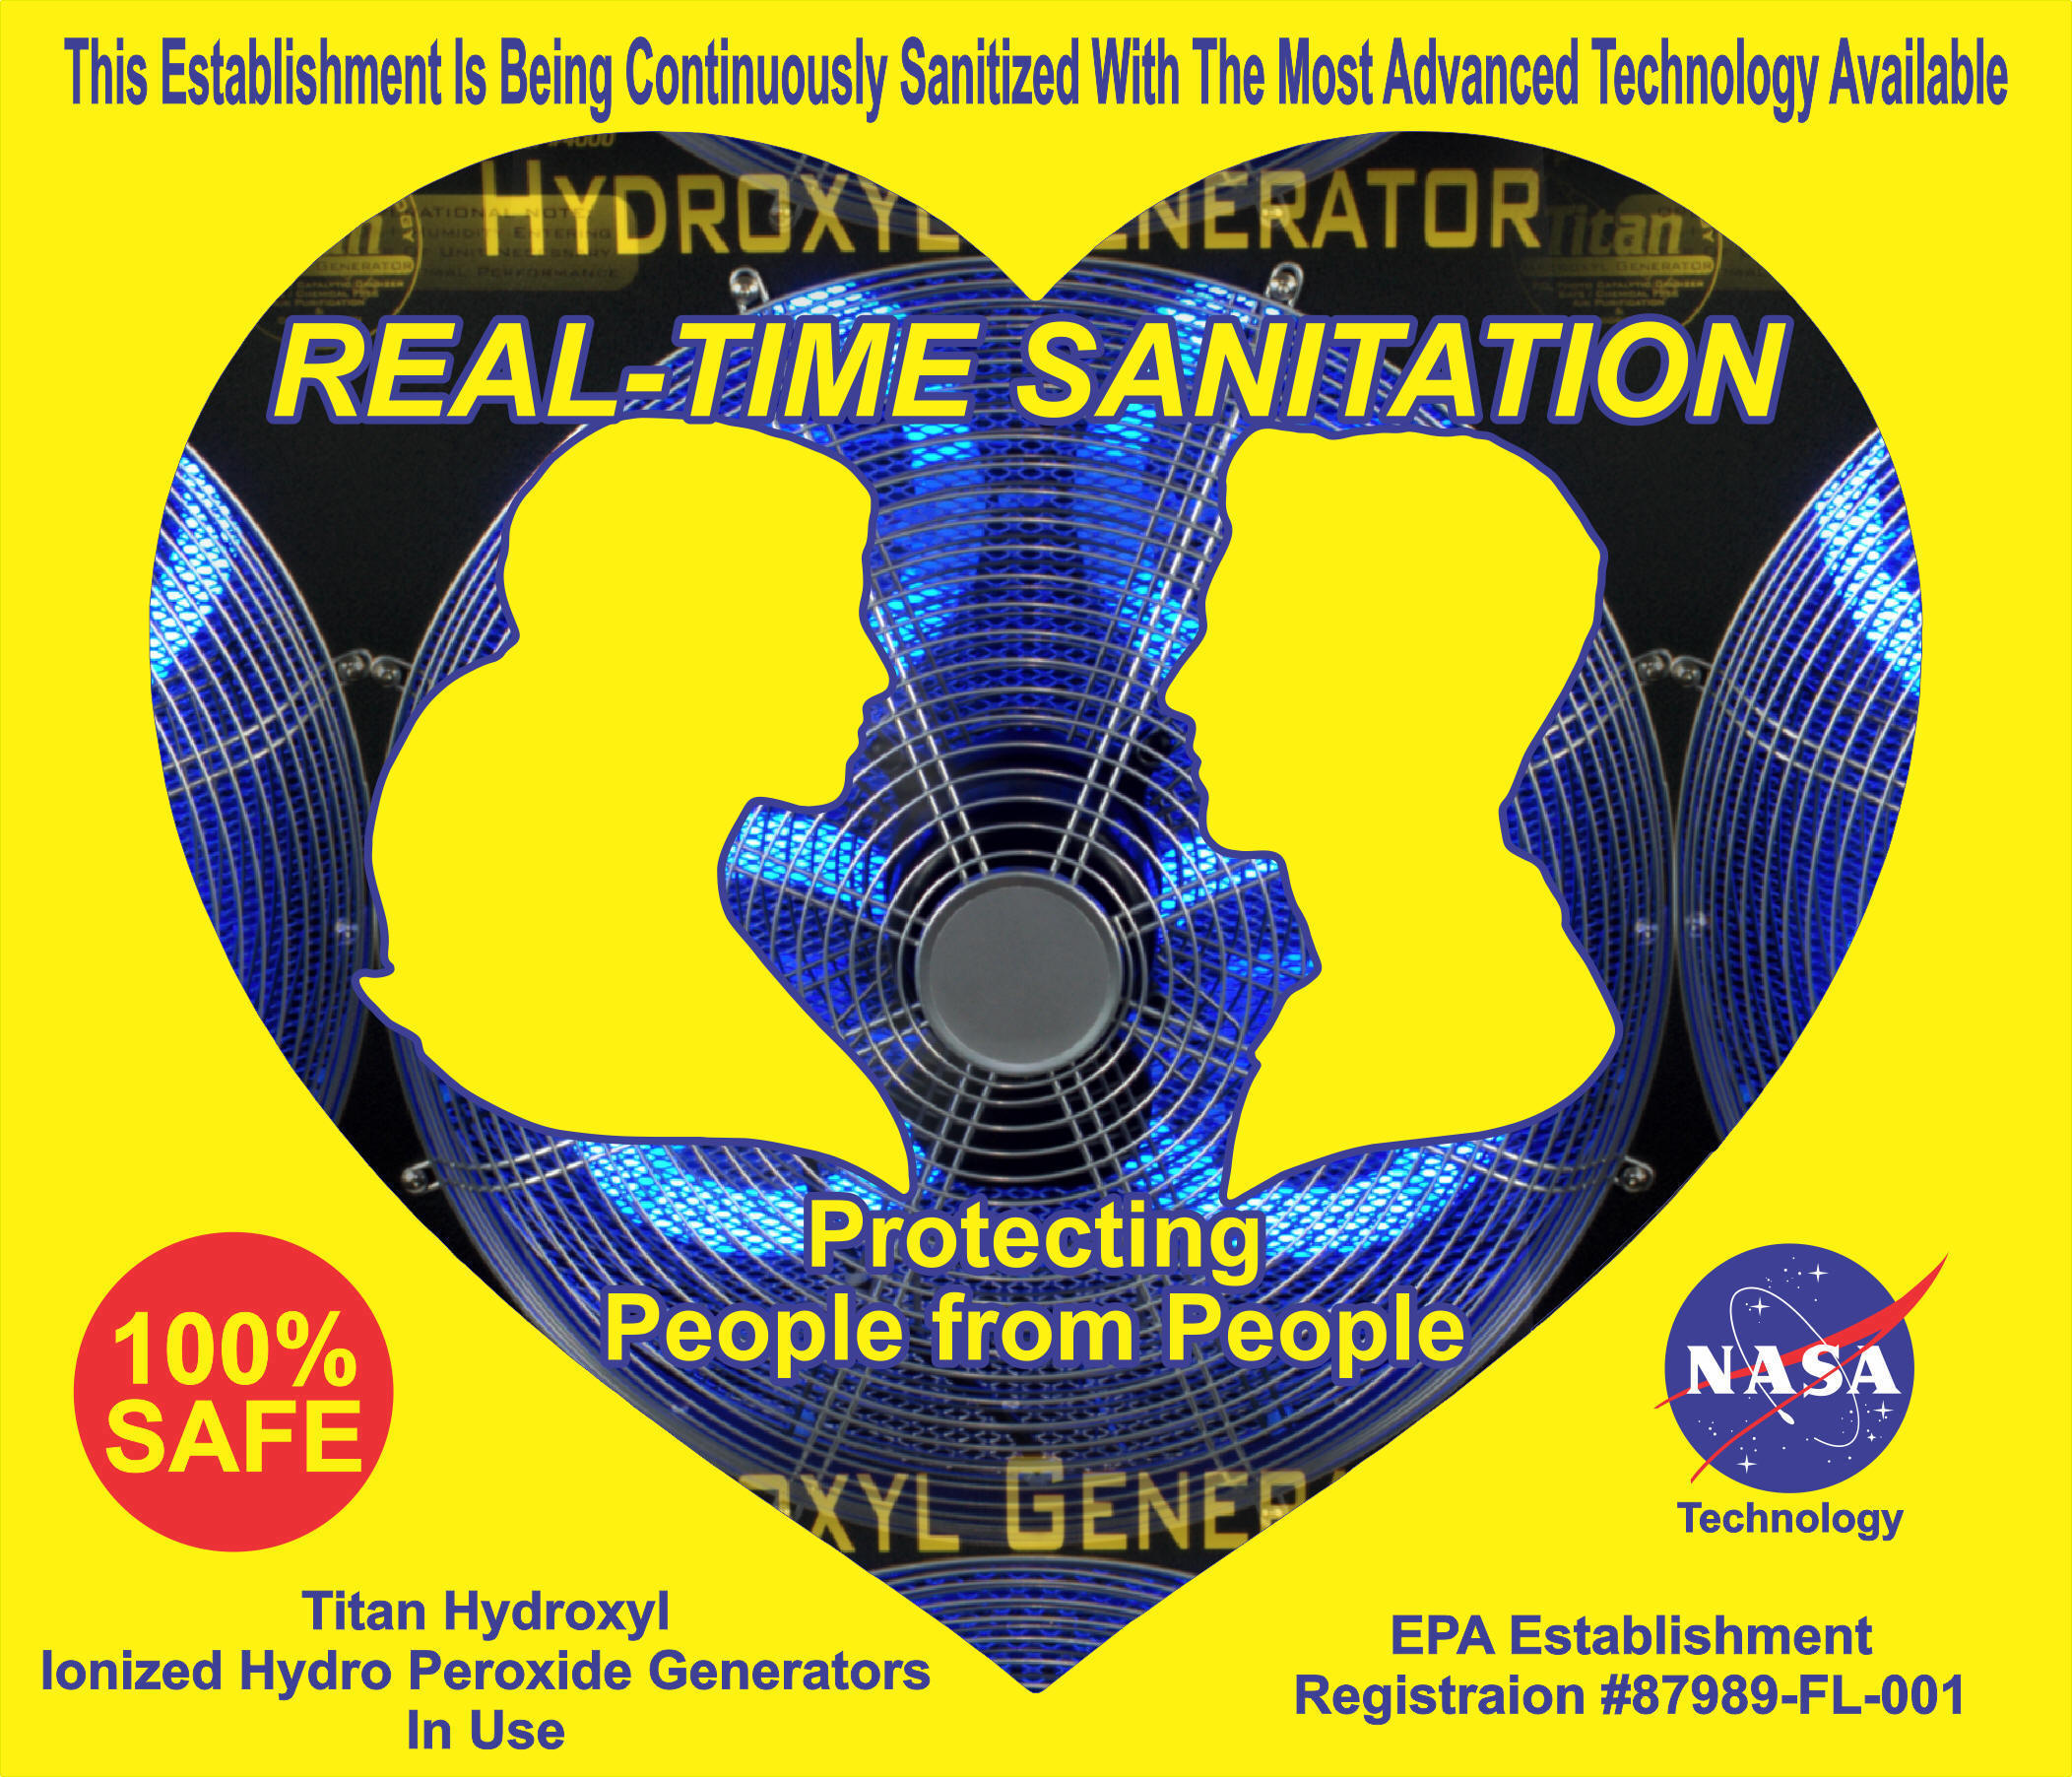 Real-Time Sanitation